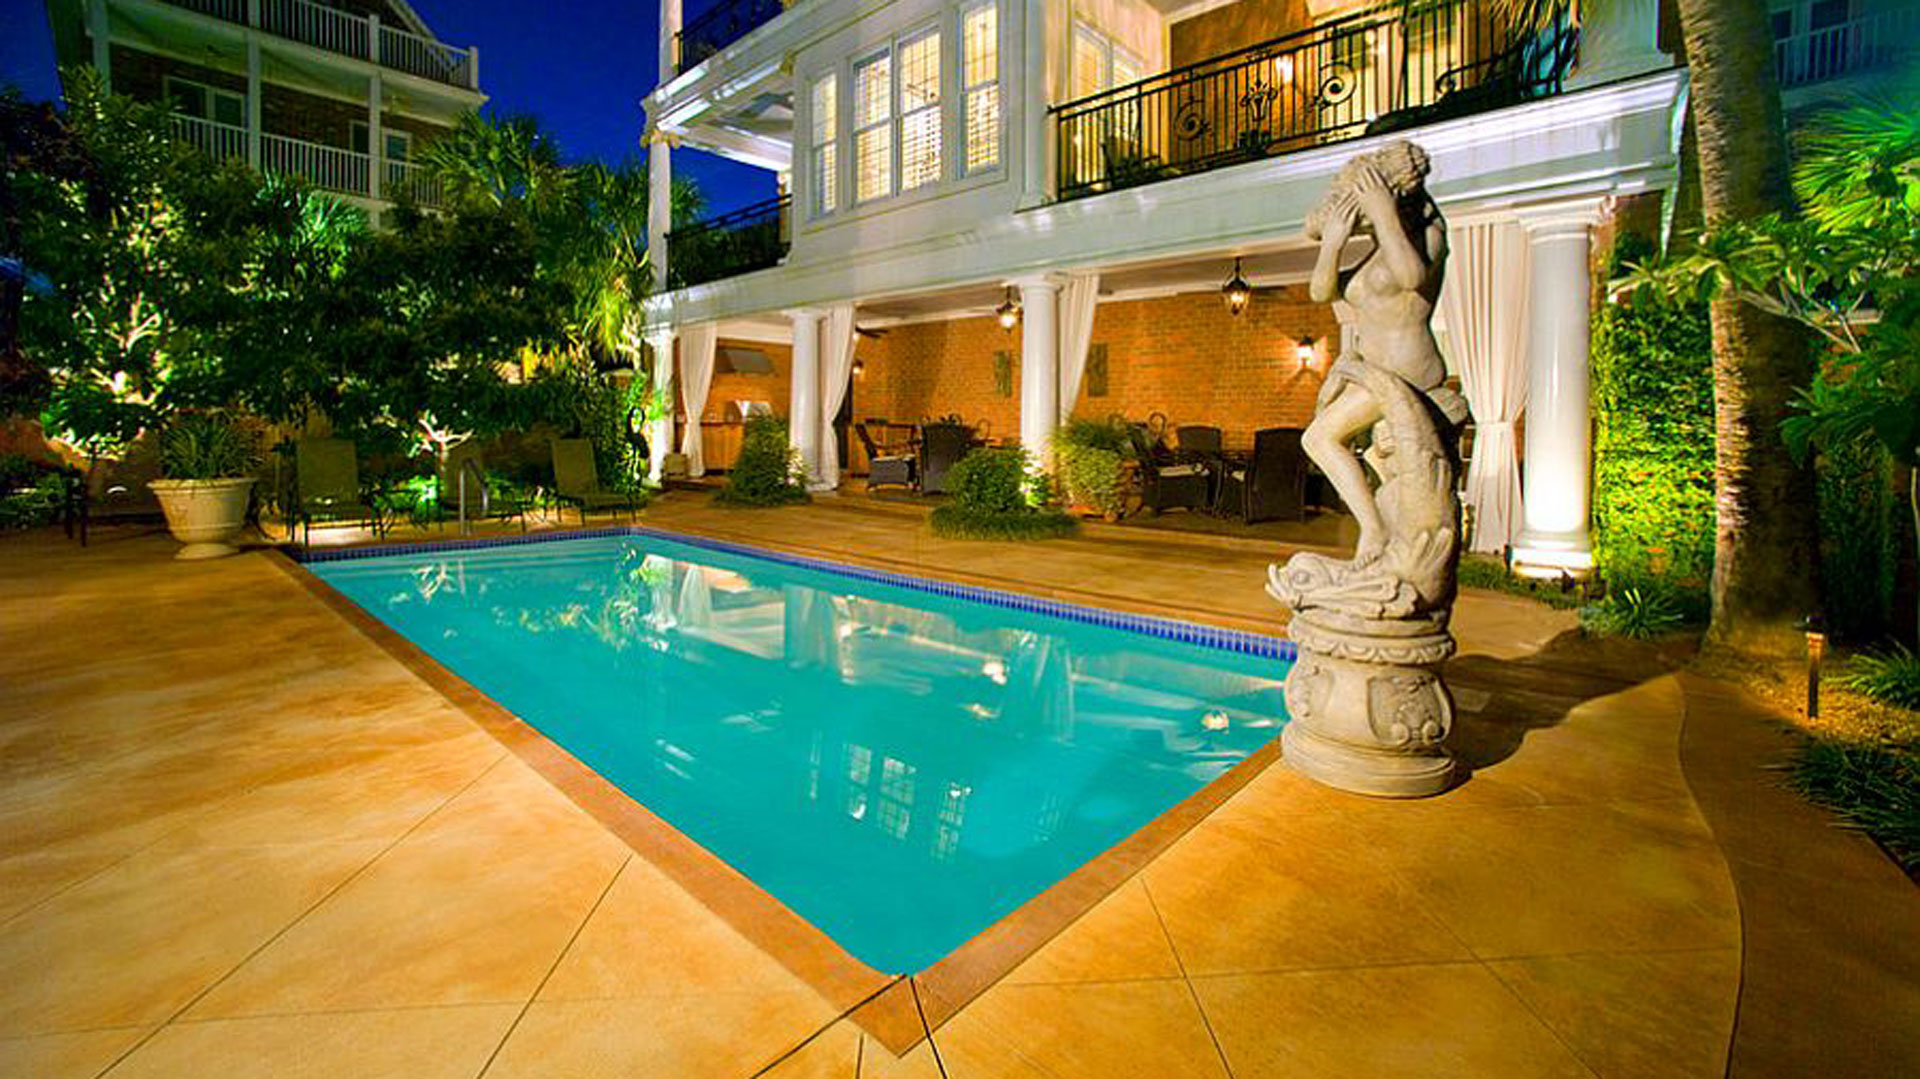 Alaglas Pools' Caribbean model in white